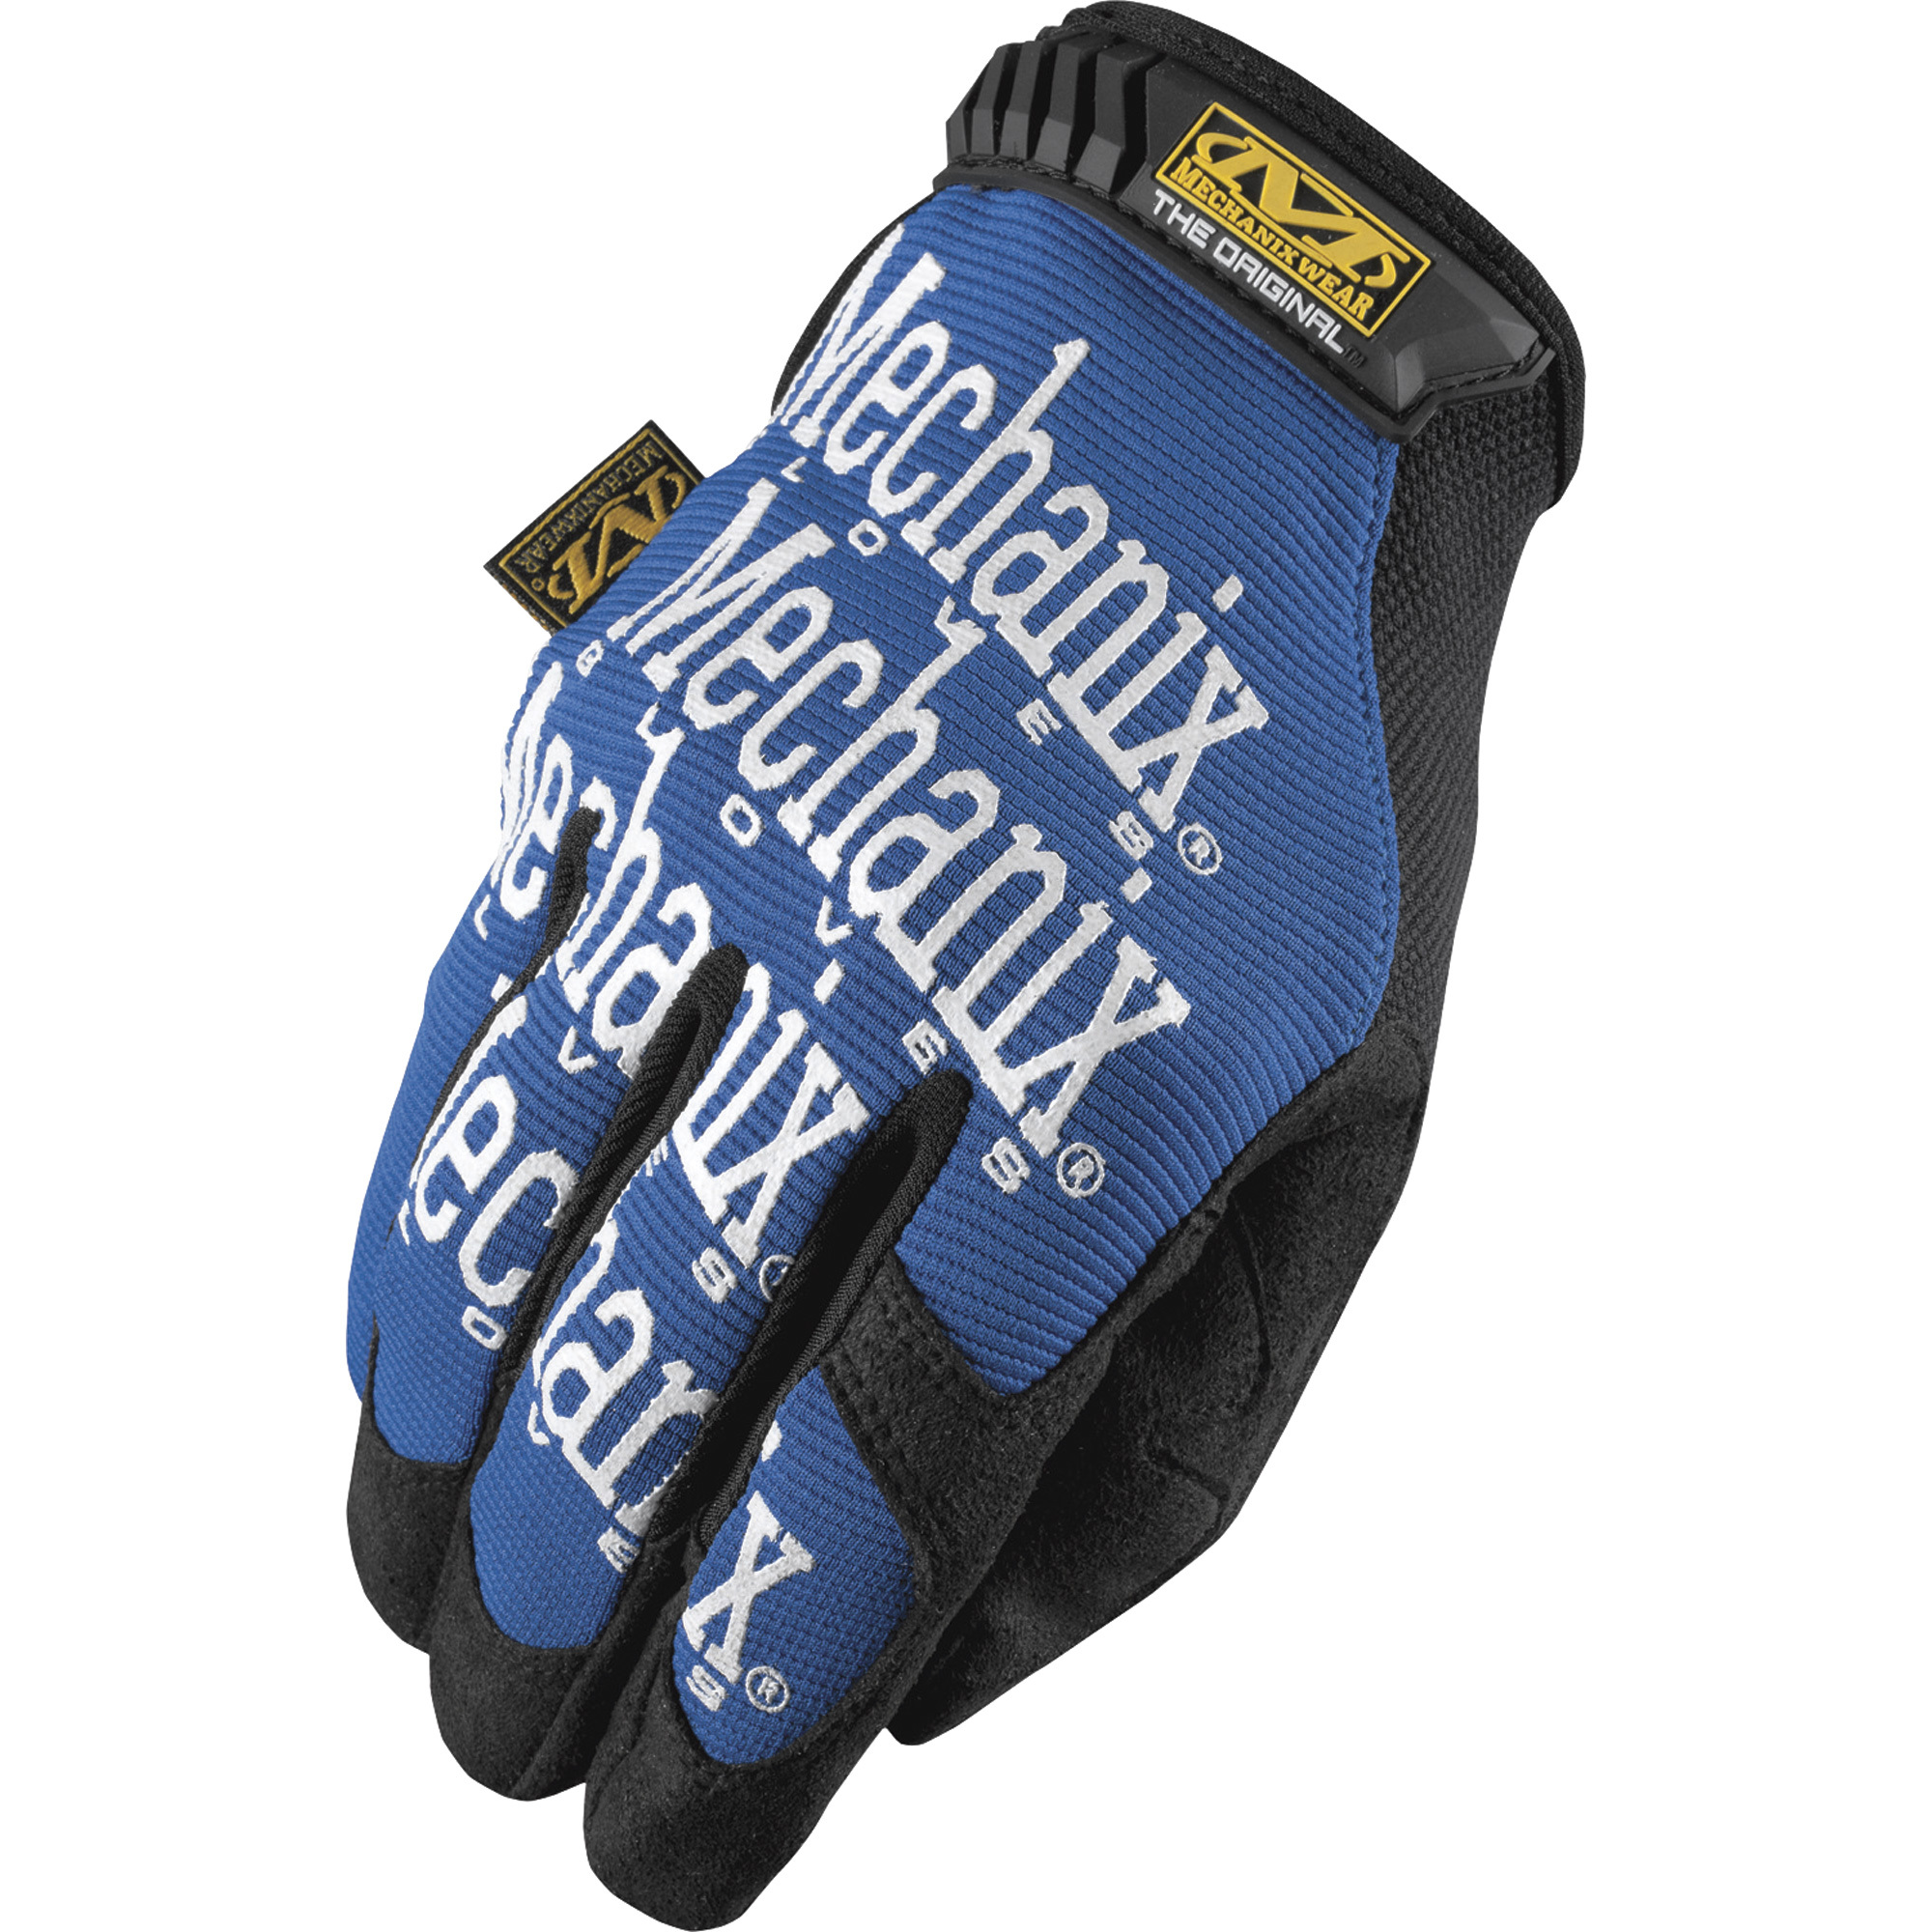 Mechanix Men's Wear Original Gloves - Blue, Large, Model MG-03-010